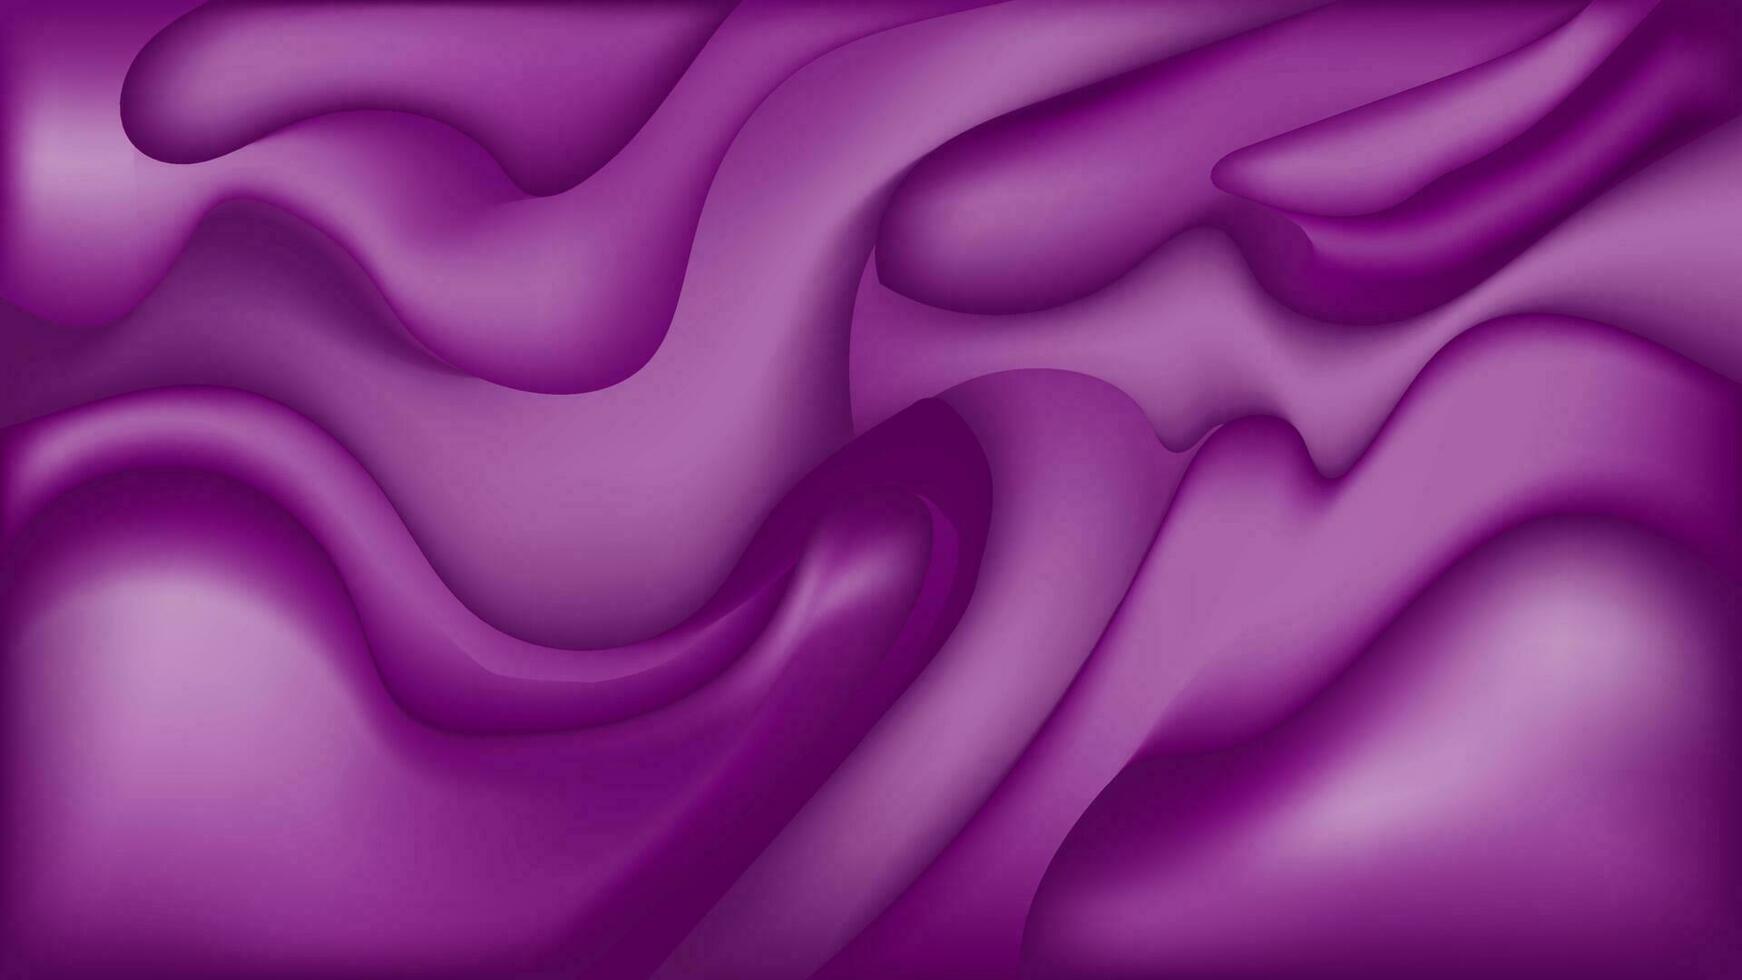 resumen ondulado lujo 3d púrpura antecedentes vector